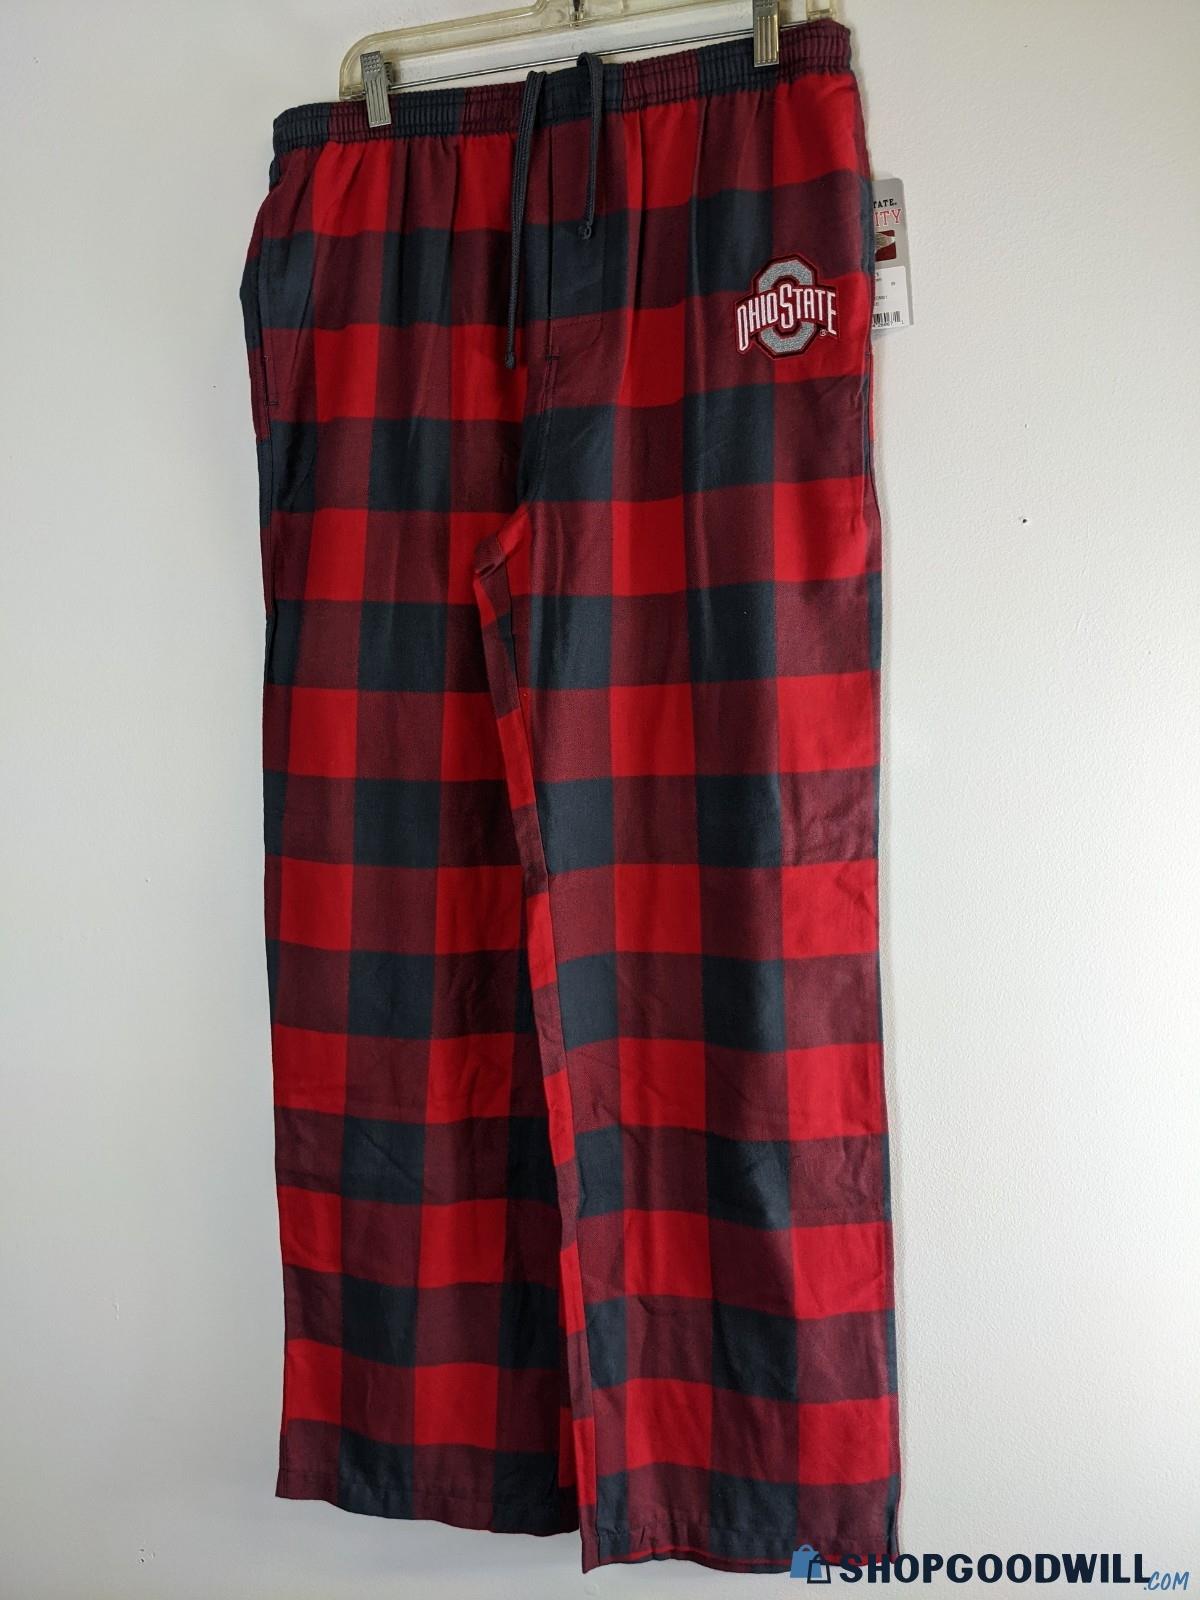 Nwt Ohio State University Pajama Pants M | ShopGoodwill.com